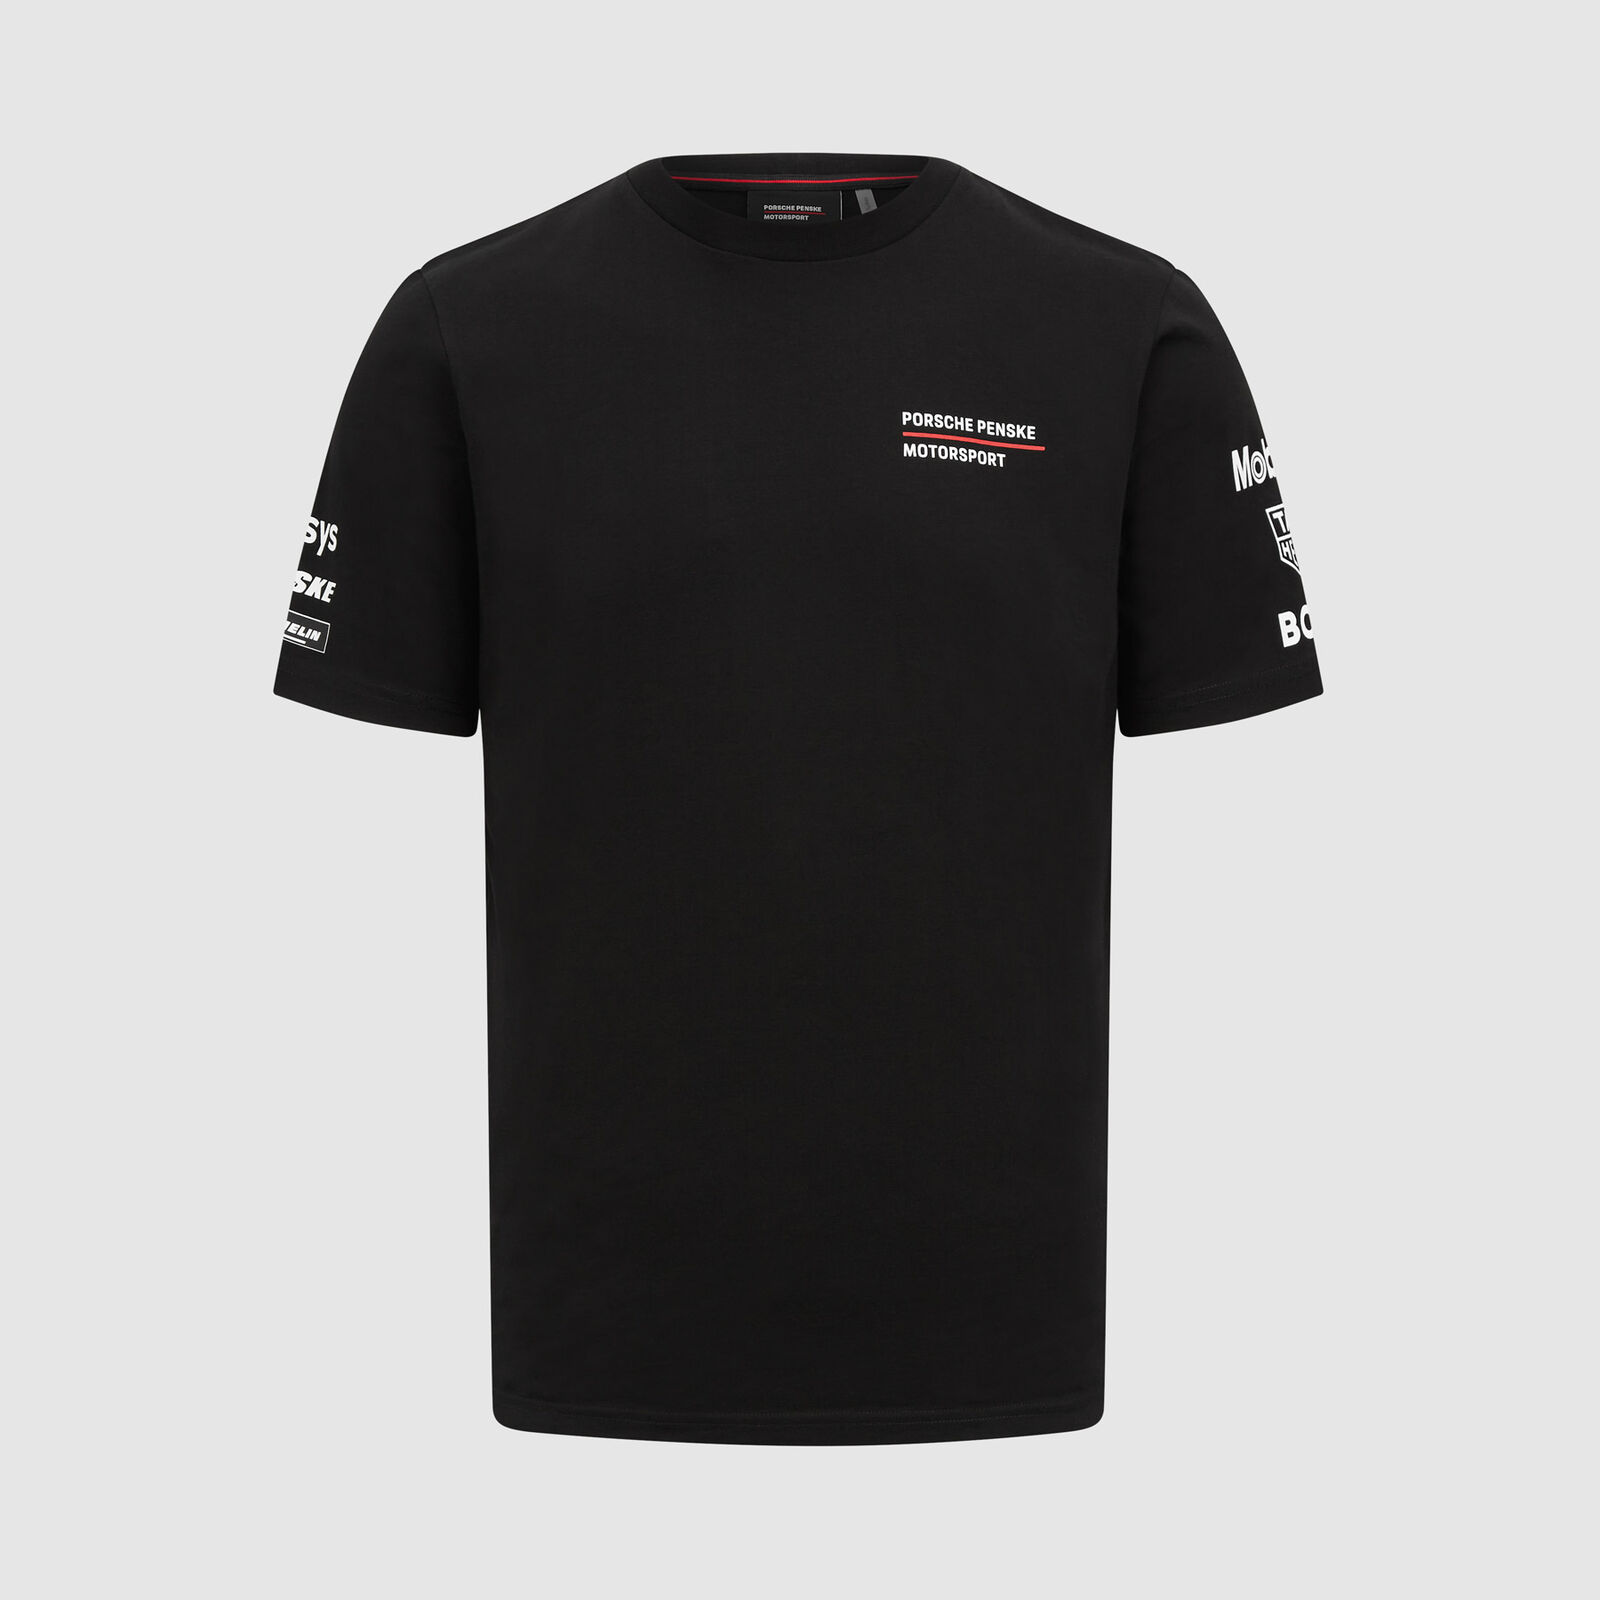 Penske Team T-shirt - Porsche Motorsport